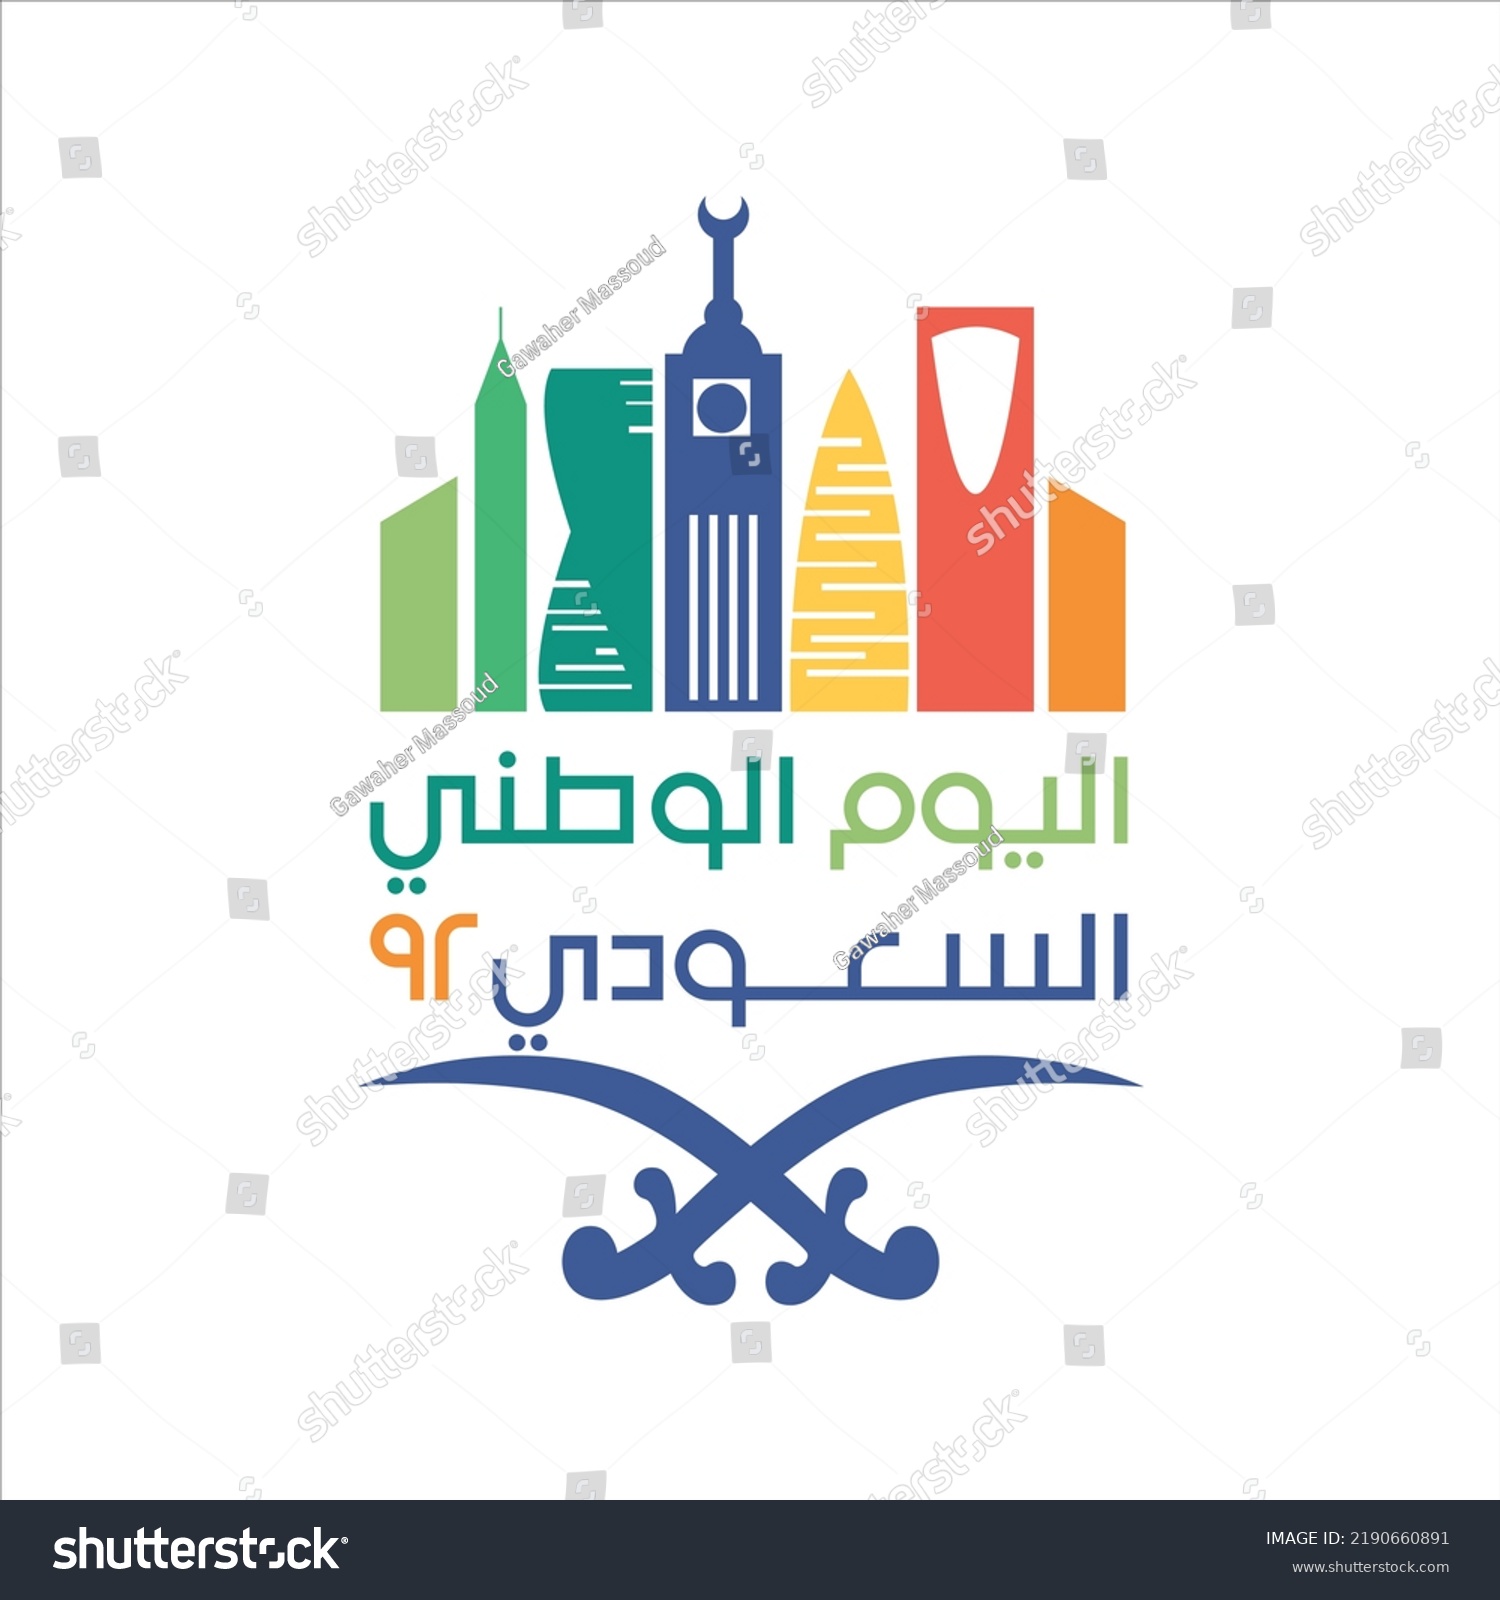 The National Health Card of the Kingdom of Saudi Arabia on September 23 in a beautiful Arabic font, the translation of the text is Saudi Arabia on September 23. #2190660891